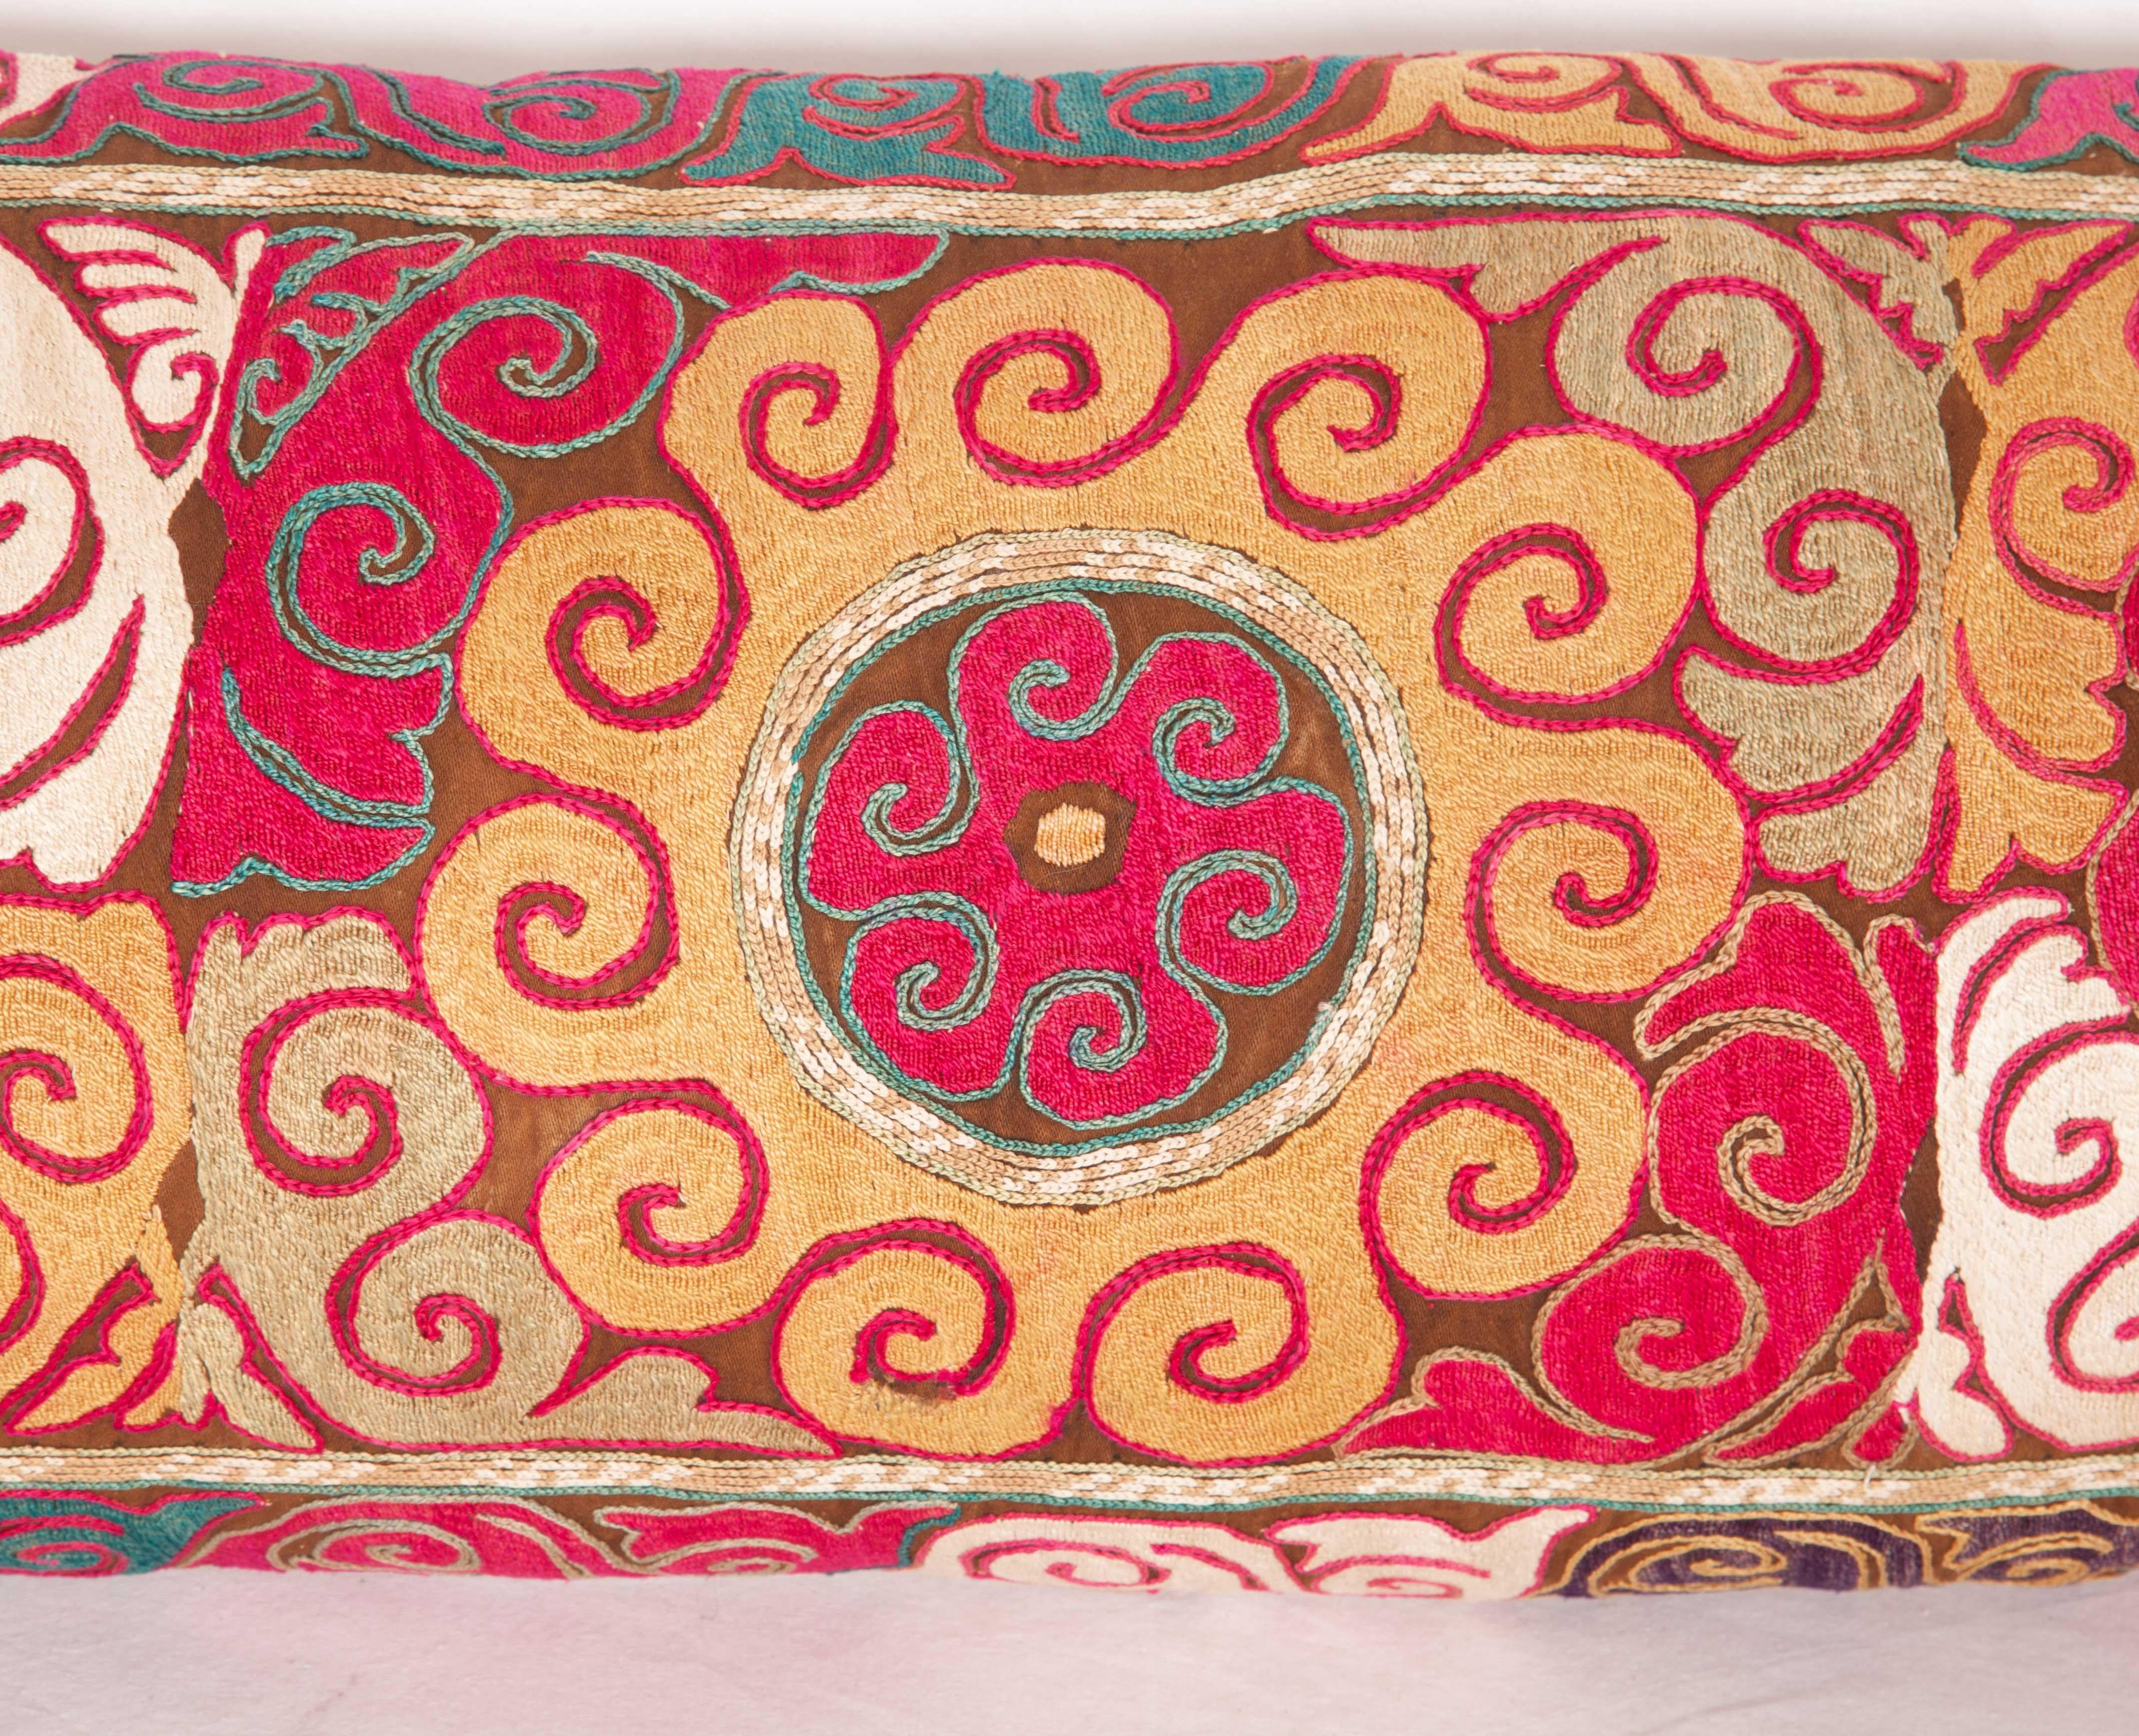 Suzani Lumbar Pillow Case Fashioned from an Uzbek Embroidered Mafrash Panel